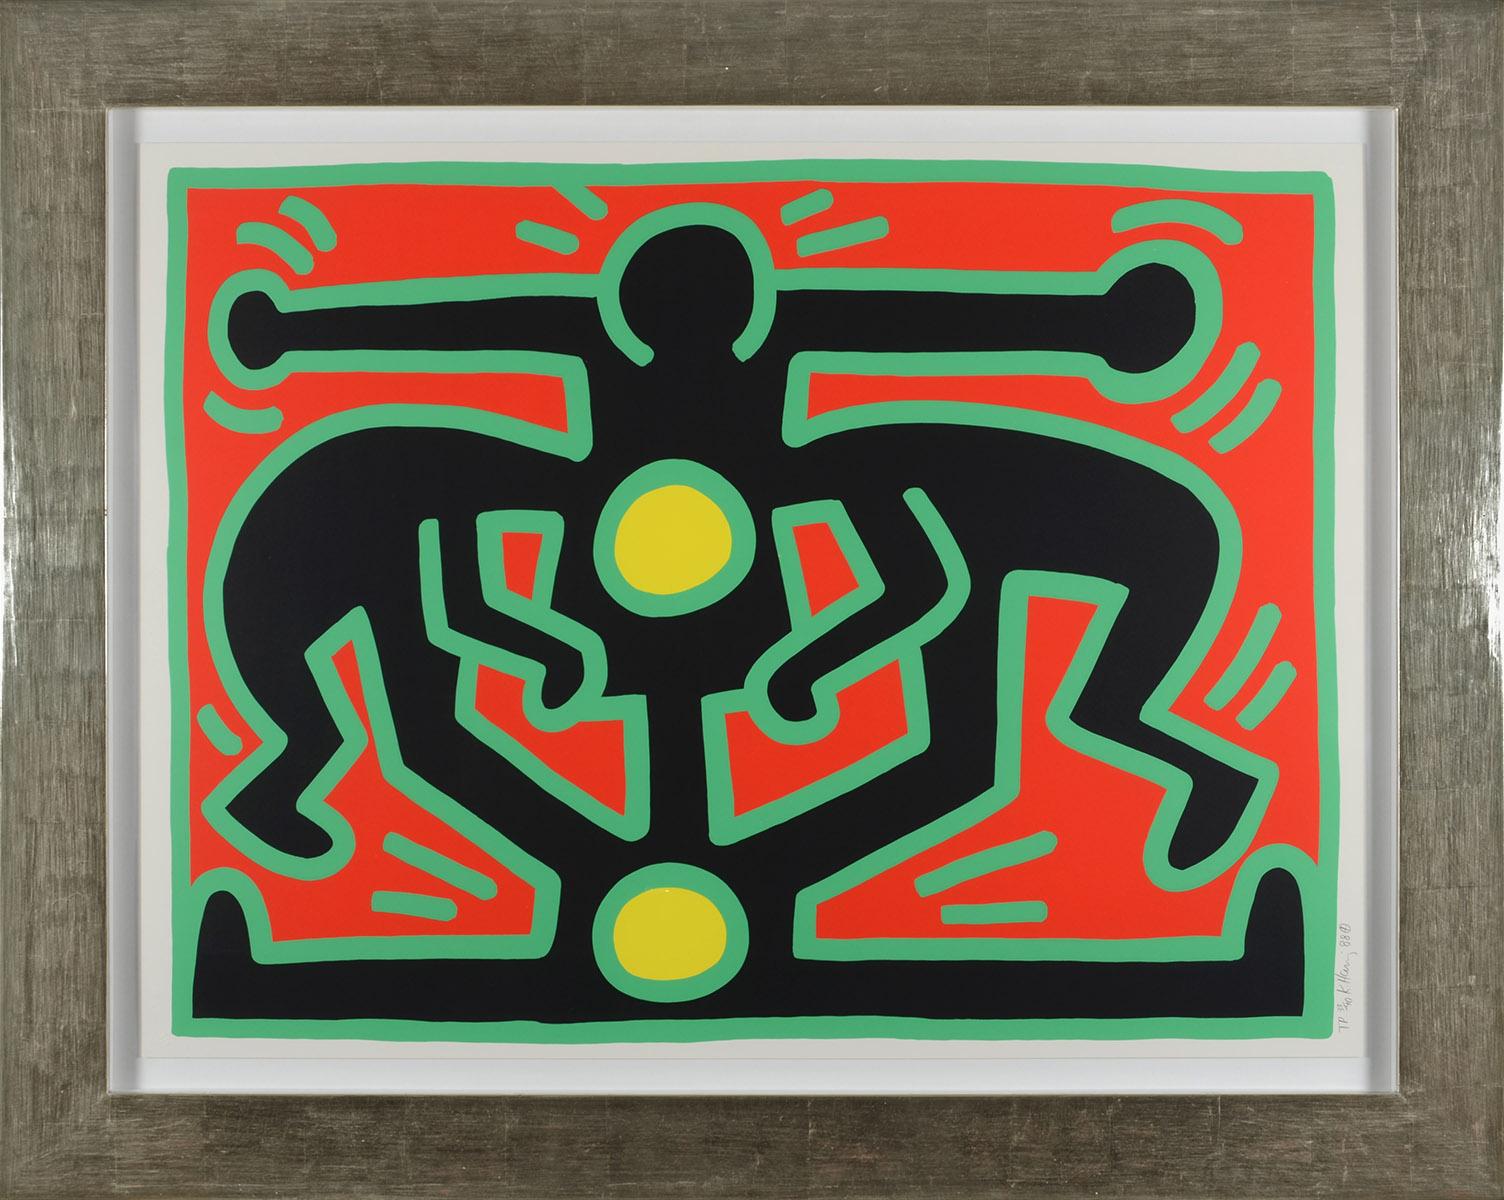 Growing, 1988 #2 - Pop Art Print by Keith Haring